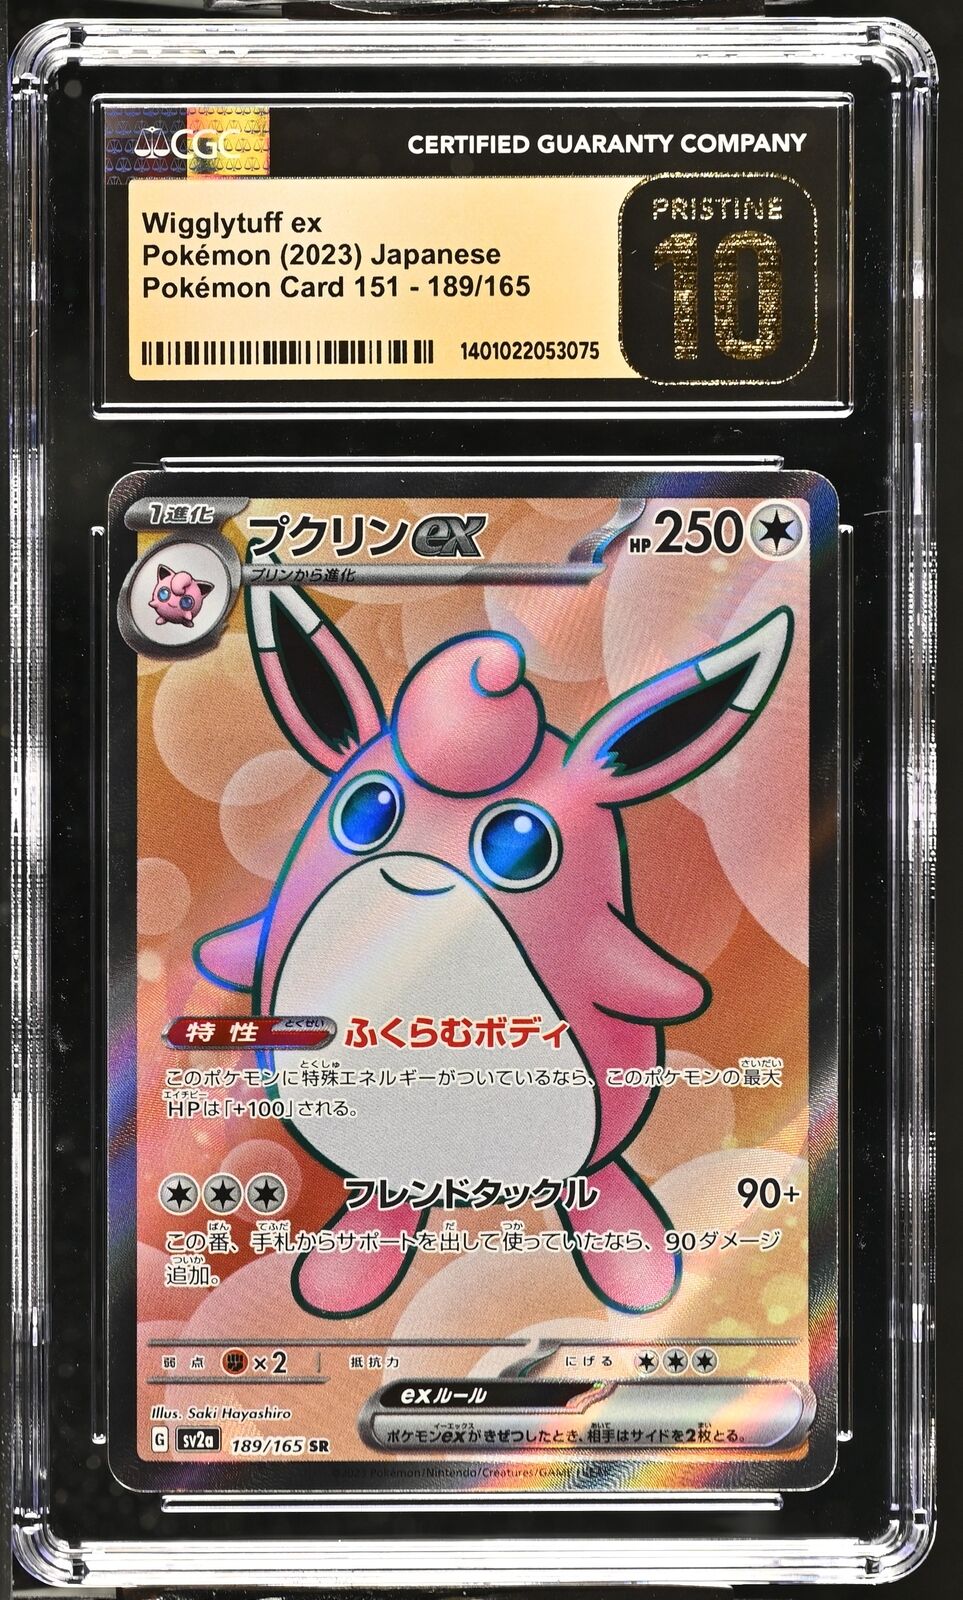 CGC 10 PRISTINE Japanese Pokémon 2023 Wigglytuff ex 189/165 SV2a Pokémon Card